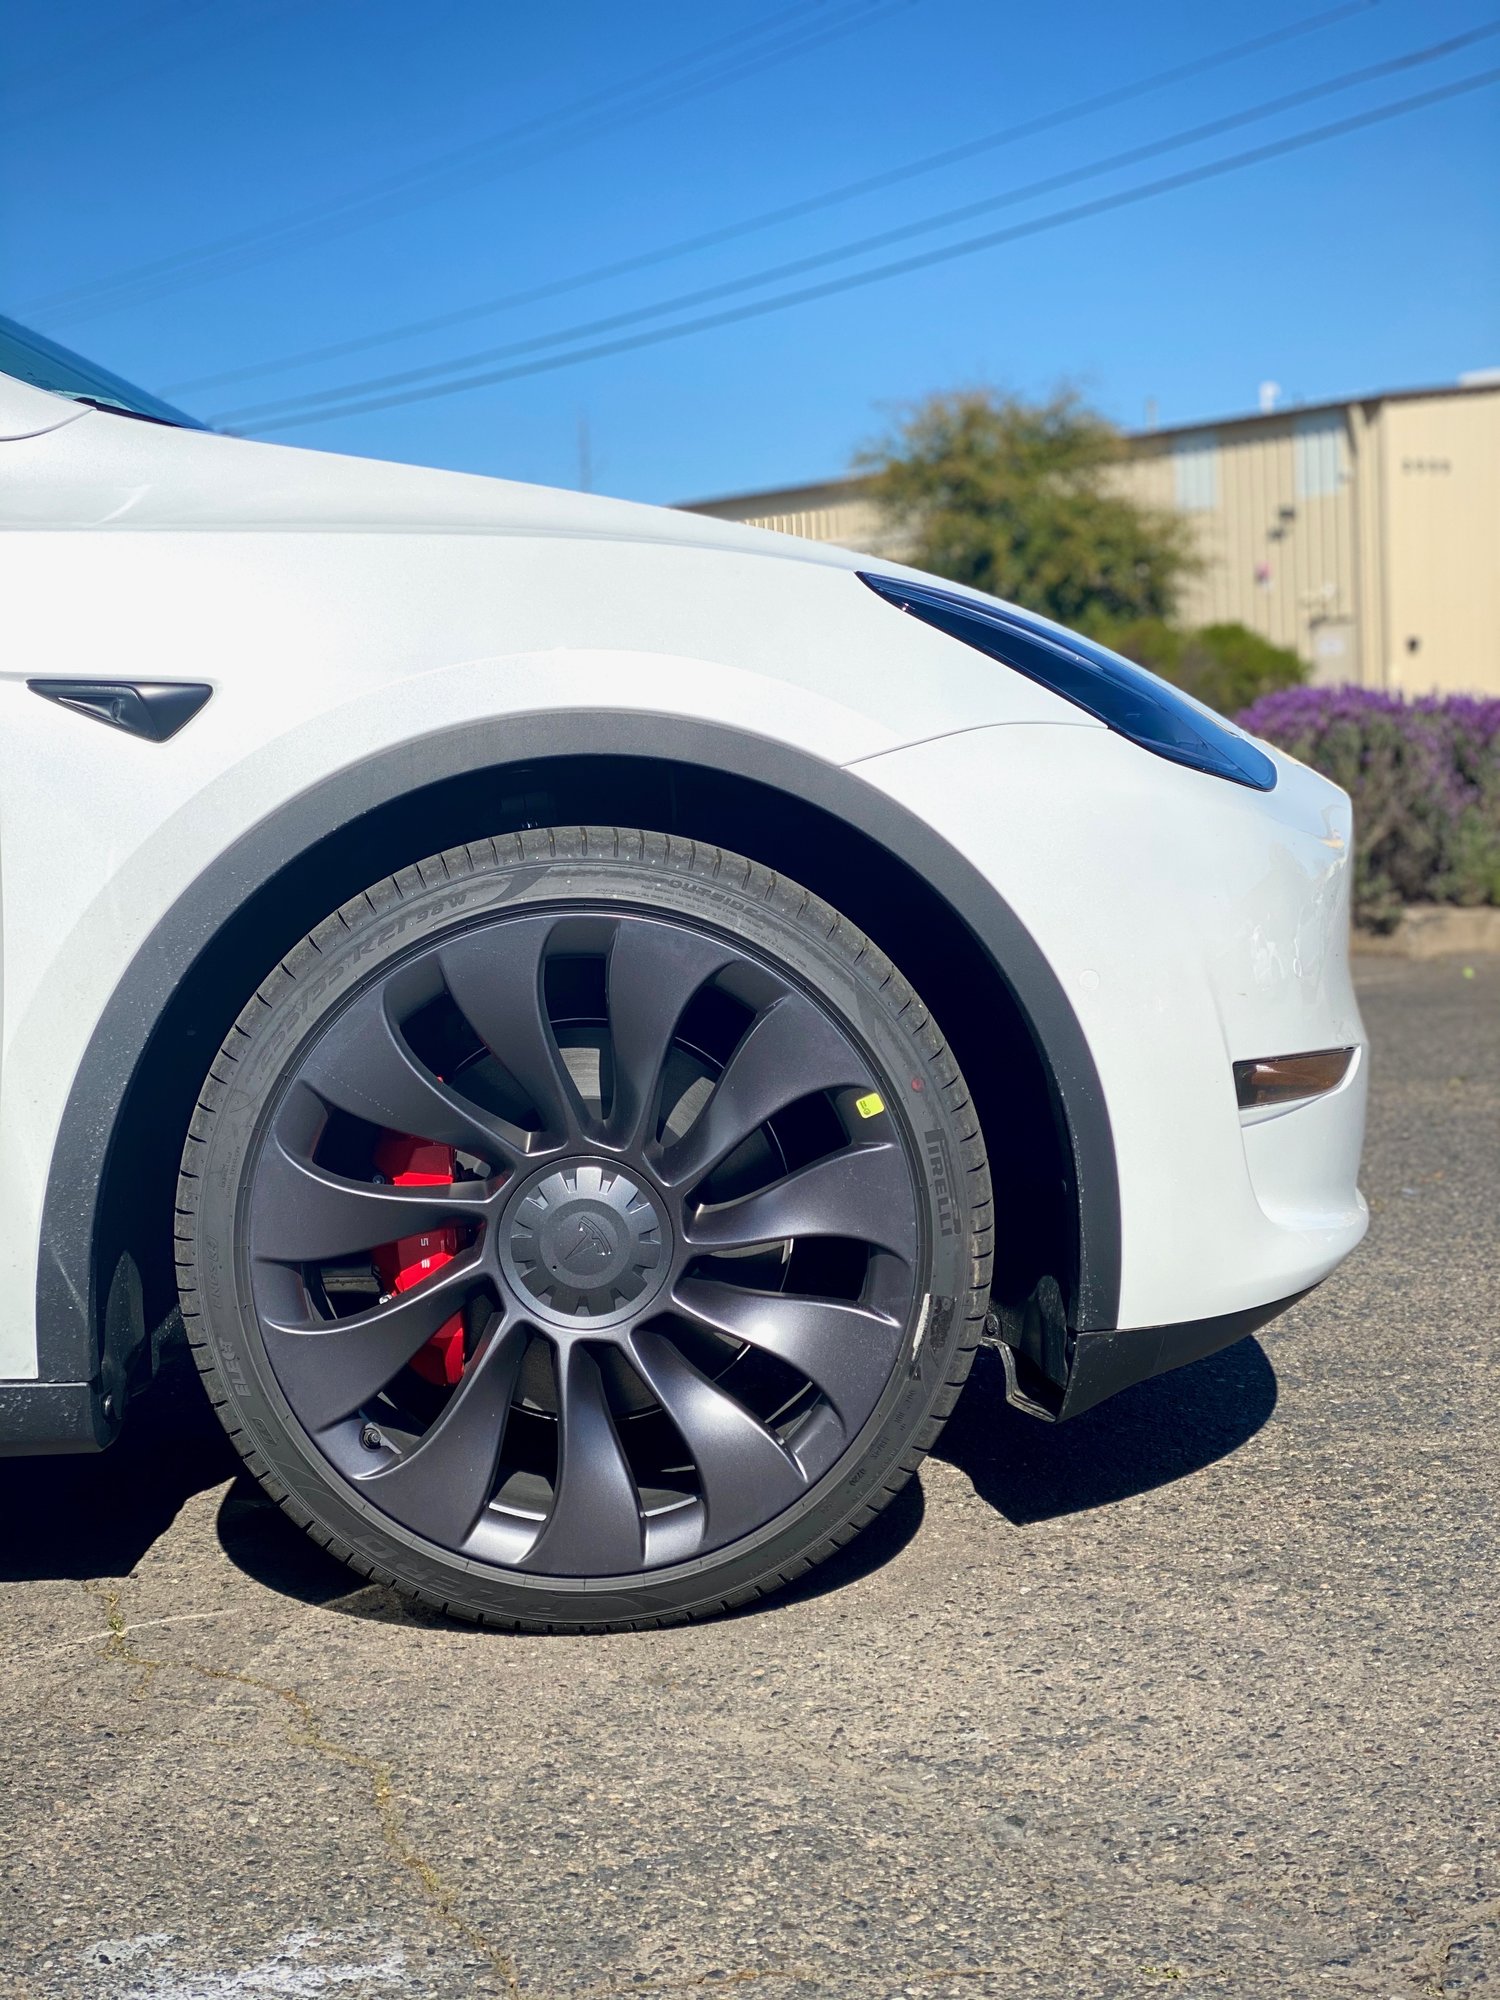 2020 Tesla Model Y Pearl White Multi-Coat  (Appearance Solutions-Sacramento,CA)~9.JPG